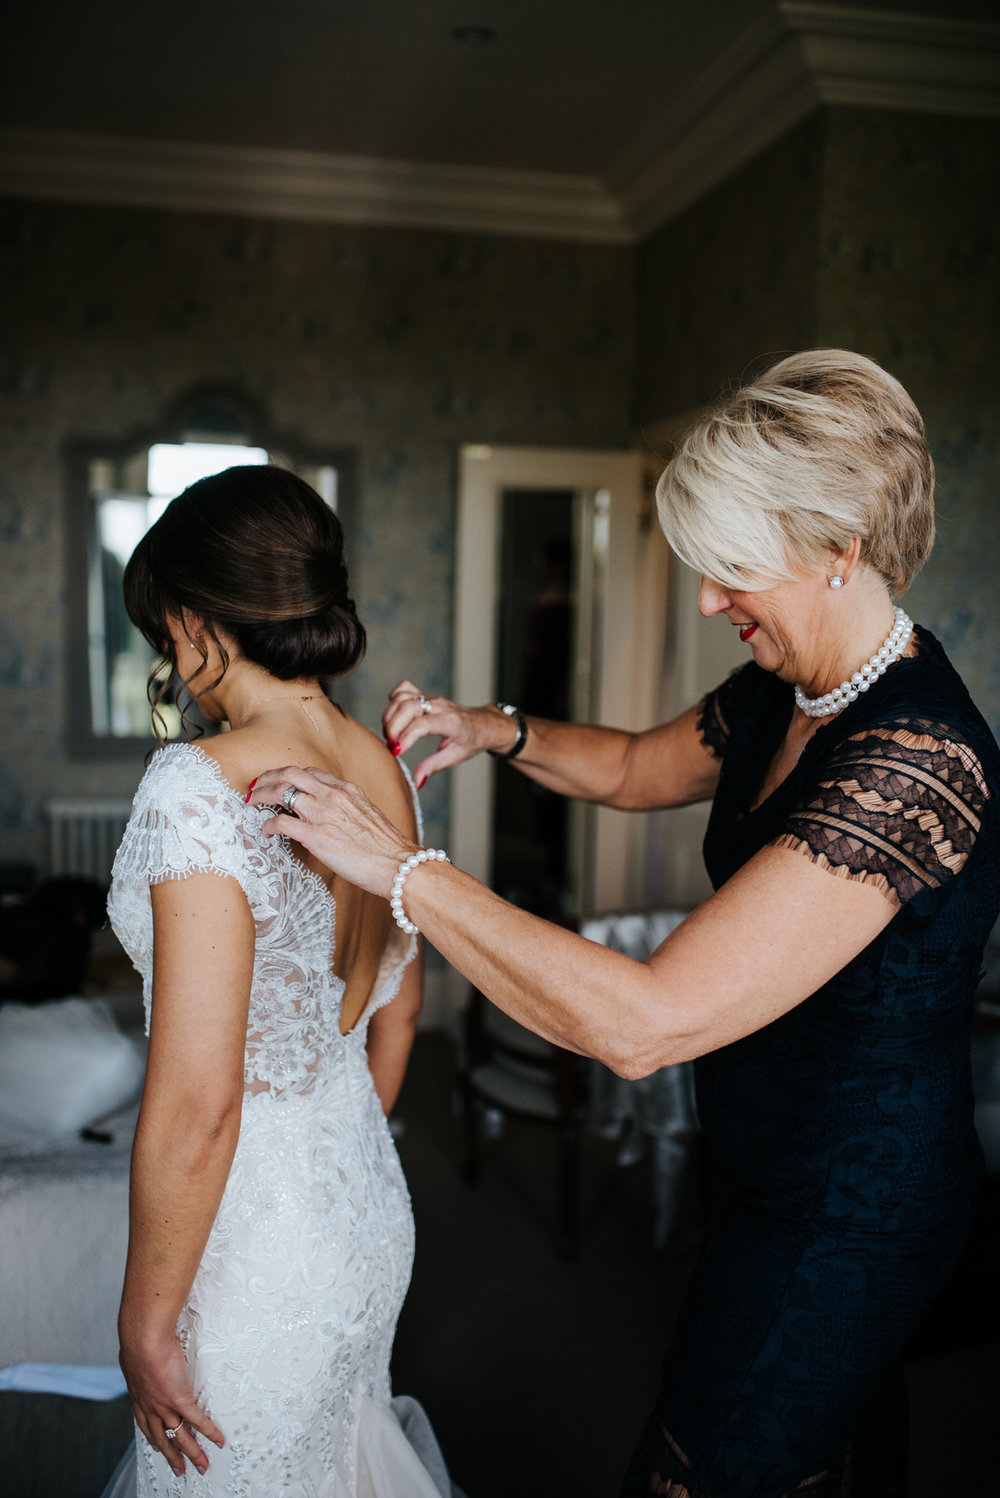 Bride's mom helps bride put on wedding dress